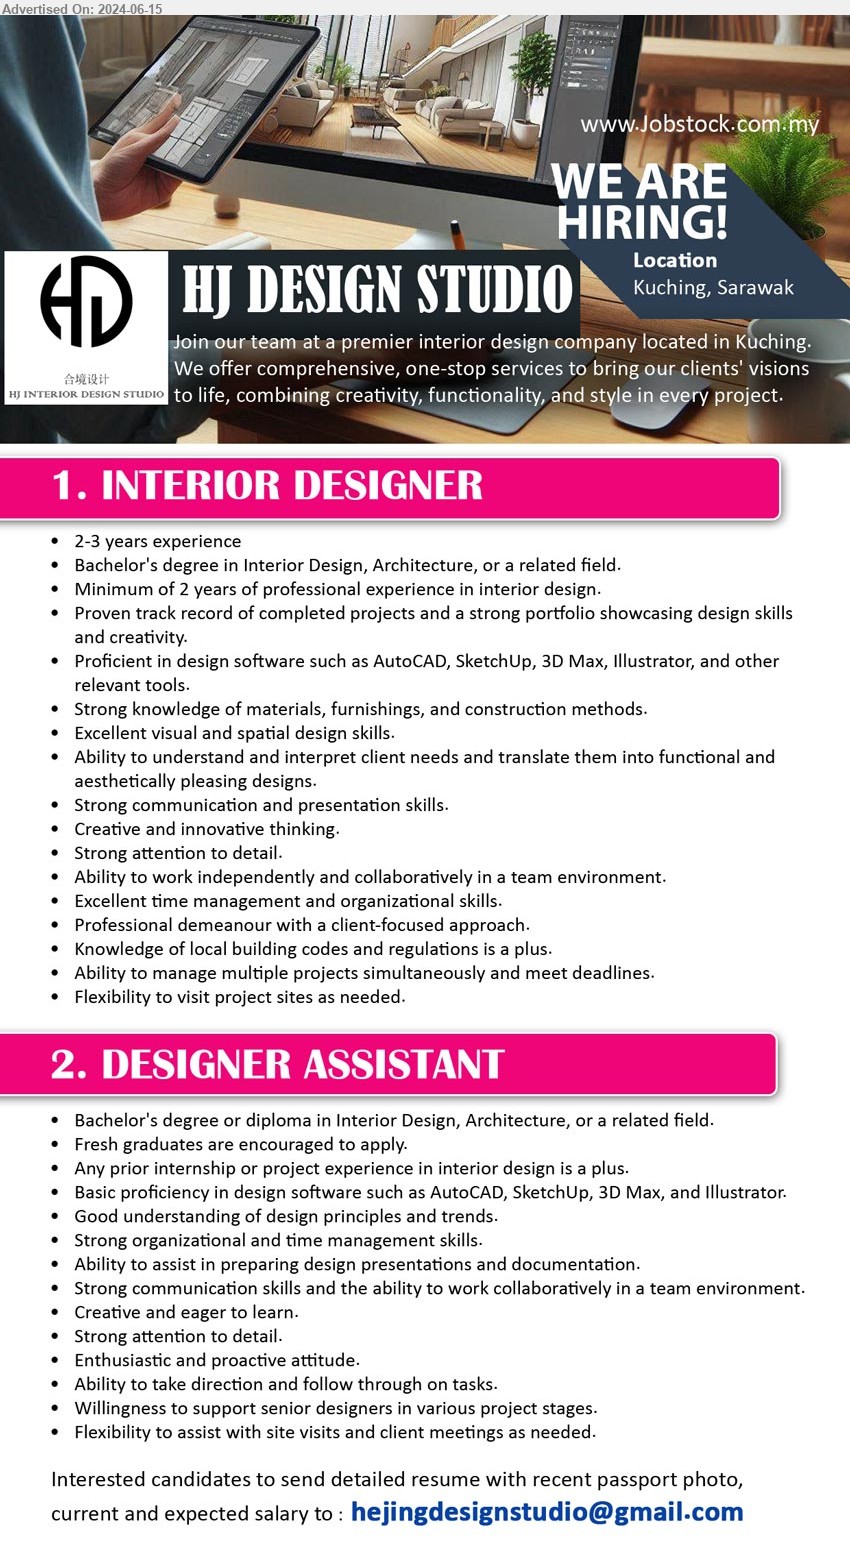 HJ DESIGN STUDIO - 1. INTERIOR DESIGNER  (Kuching), Bachelor's Degree in Interior Design, Architecture, 2-3 yrs. exp., Proficient in design software such as AutoCAD, SketchUp, 3D Max, Illustrator,,...
2. DESIGNER ASSISTANT (Kuching), Bachelor's Degree or Diploma in Interior Design, Architecture,...
Email resume to ...